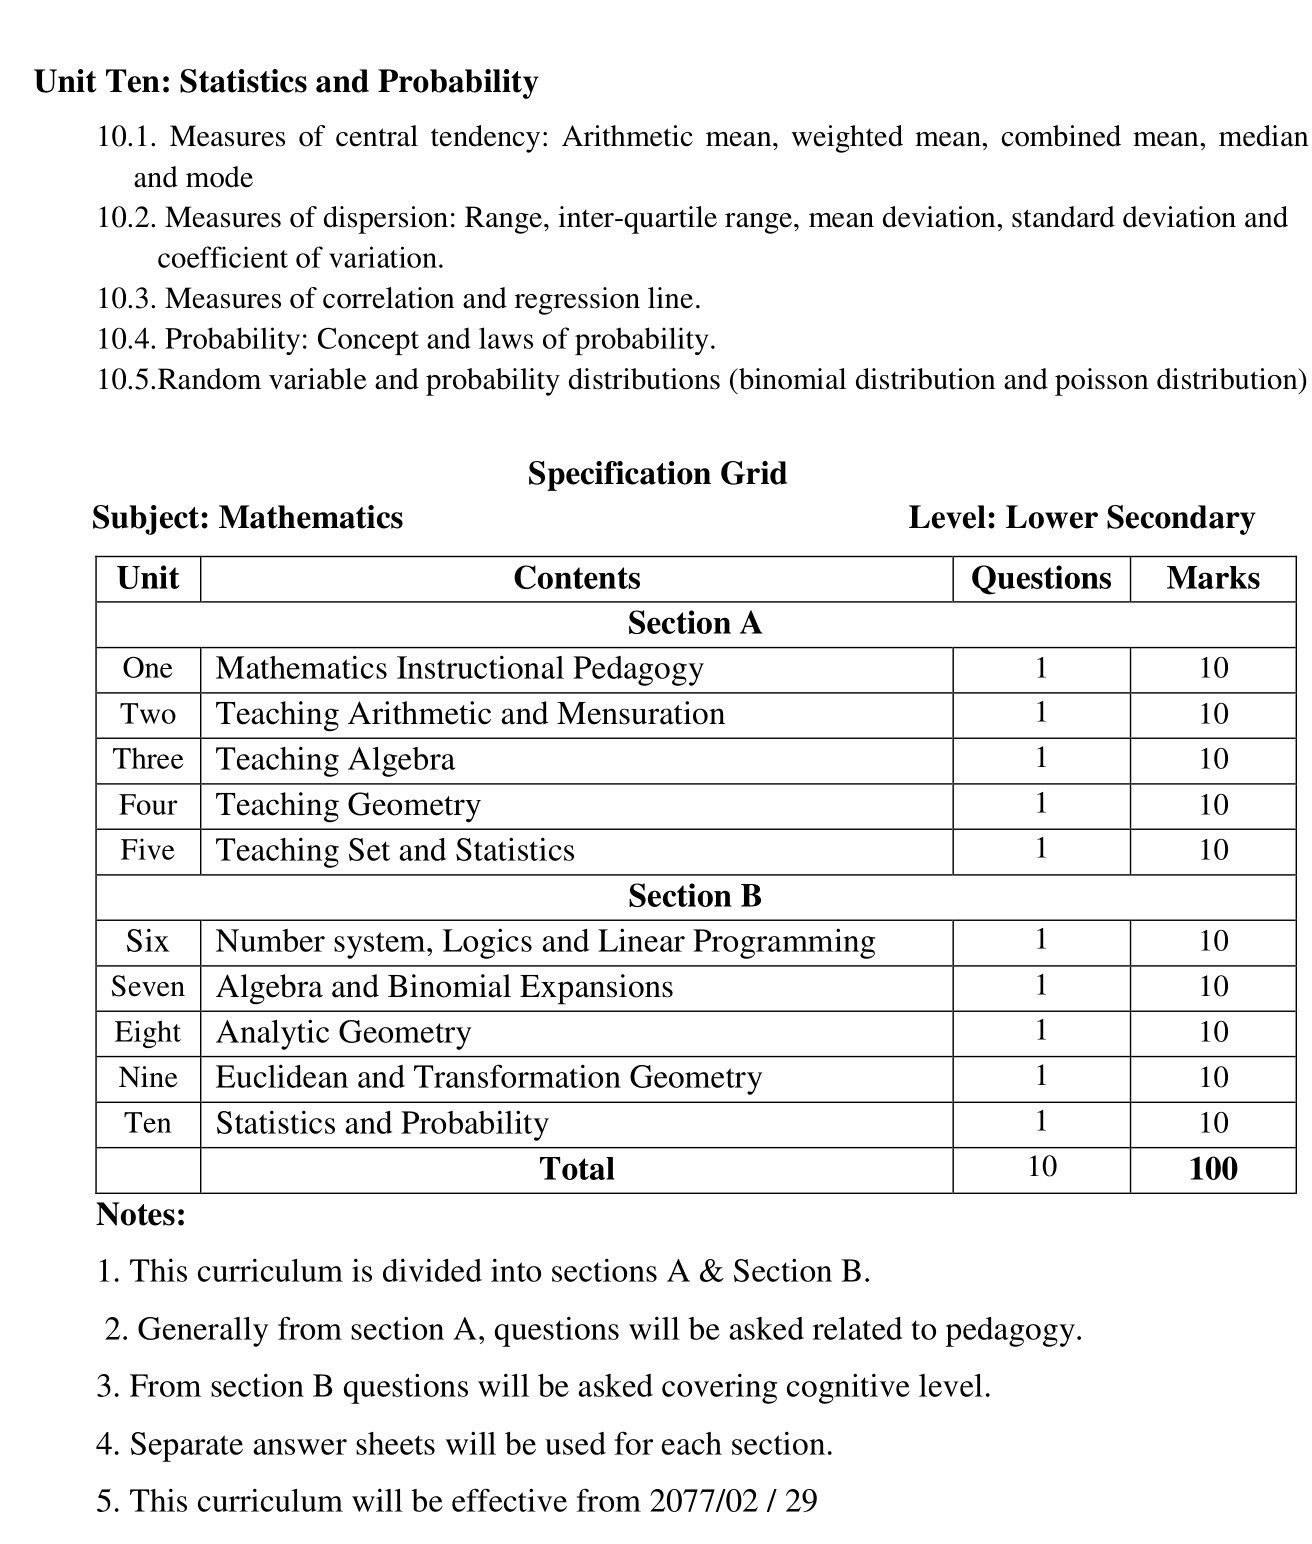 Shikshak Sewa Aayog Curriculum of Lower Secondary Level Mathematic Subject:- We will put the Shikshak Sewa Aayog lower secondary level Mathematic Subject Exam syllabus in this post.